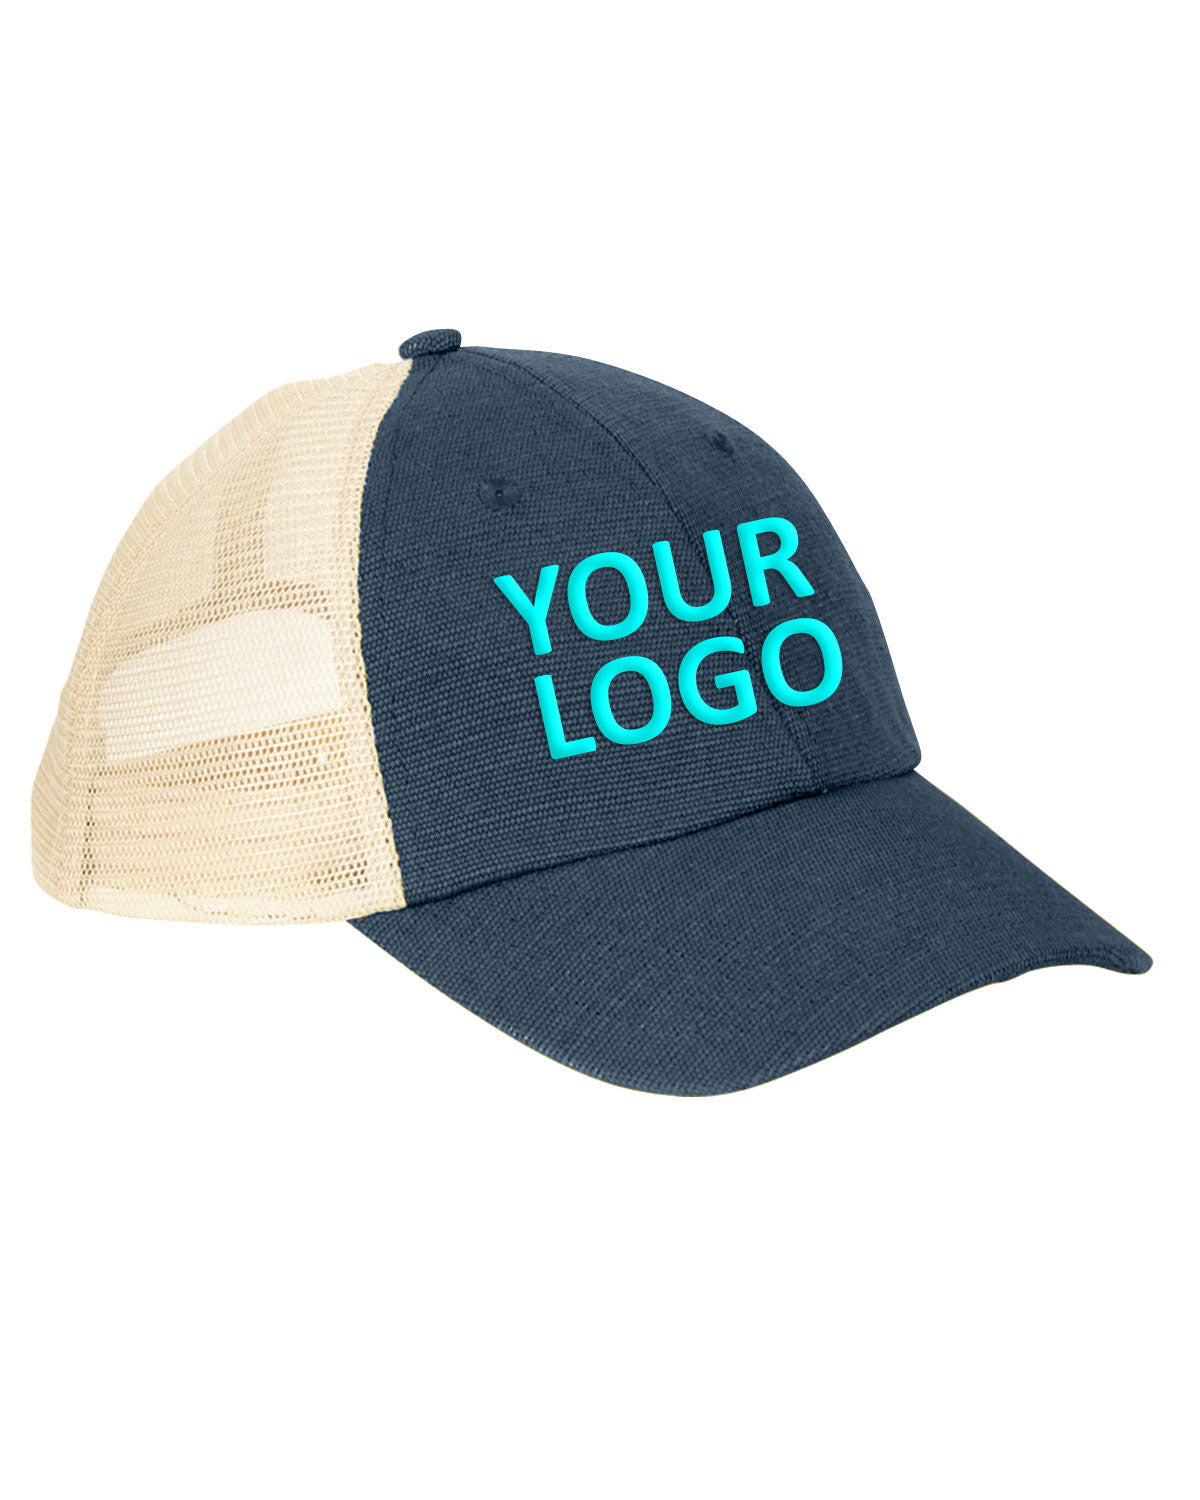 econscious_ec7095_navy/ oyster_company_logo_headwear